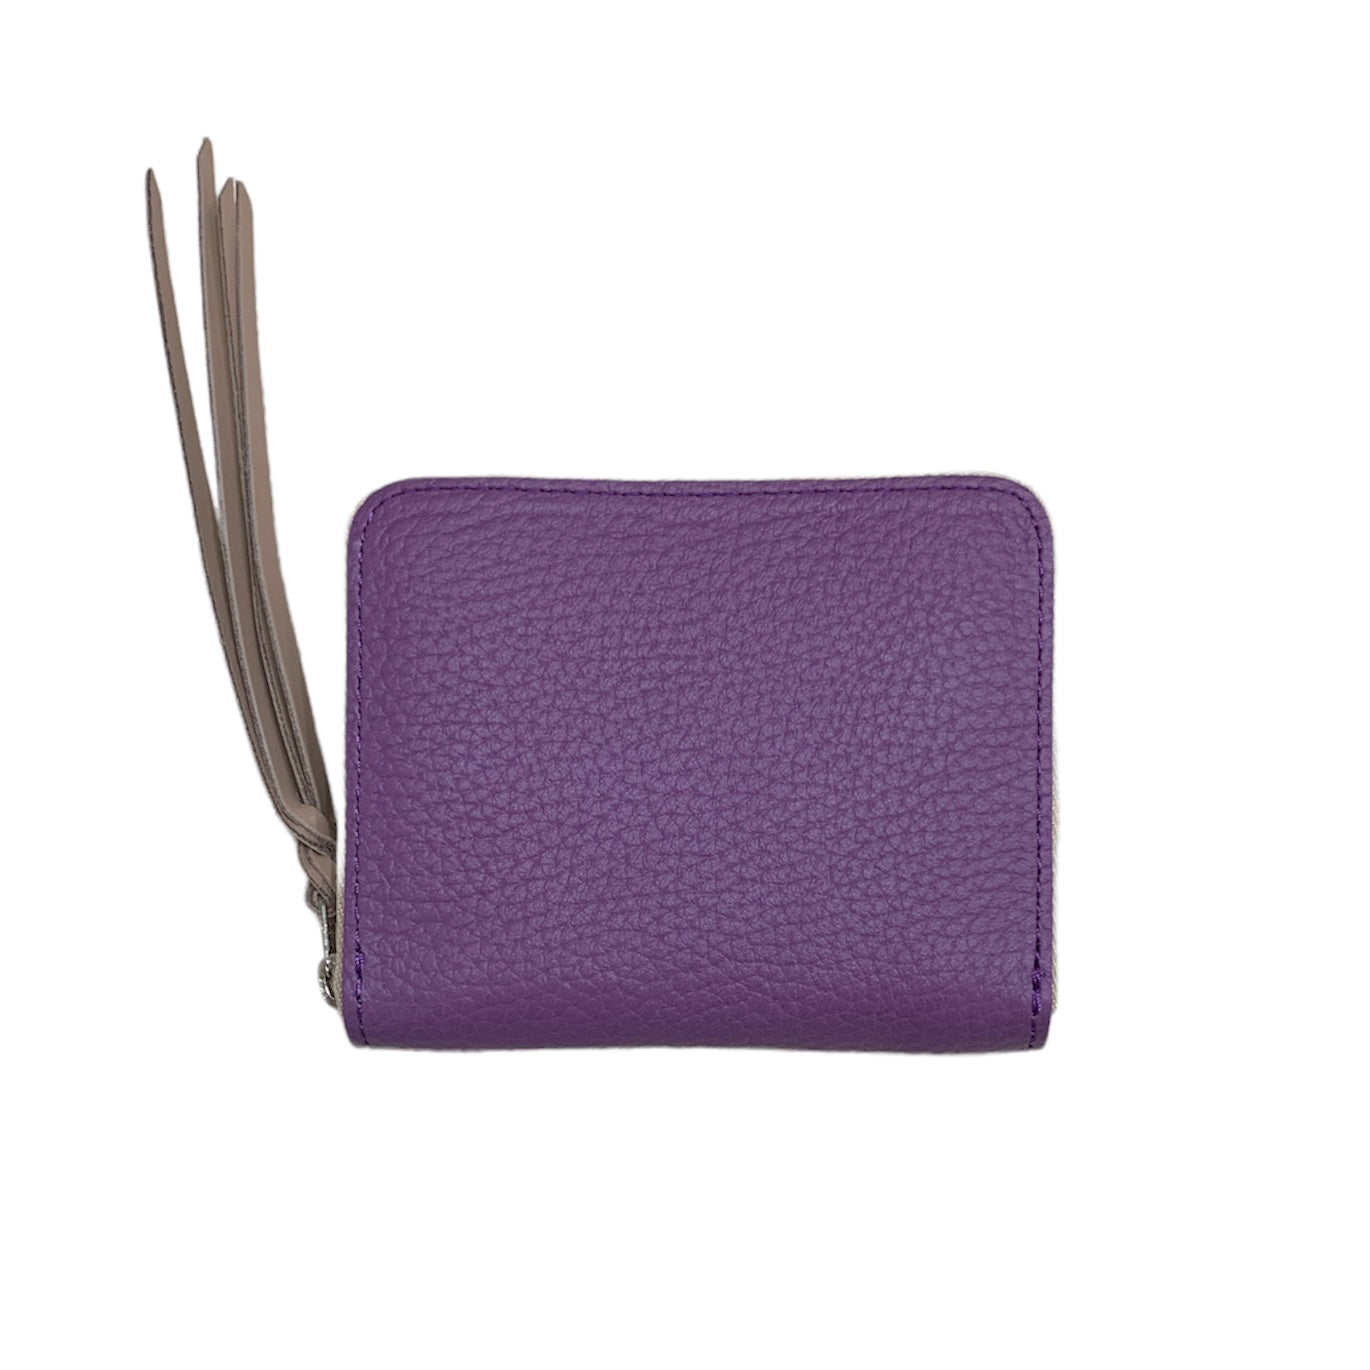 Anak compact round zip color scheme wallet